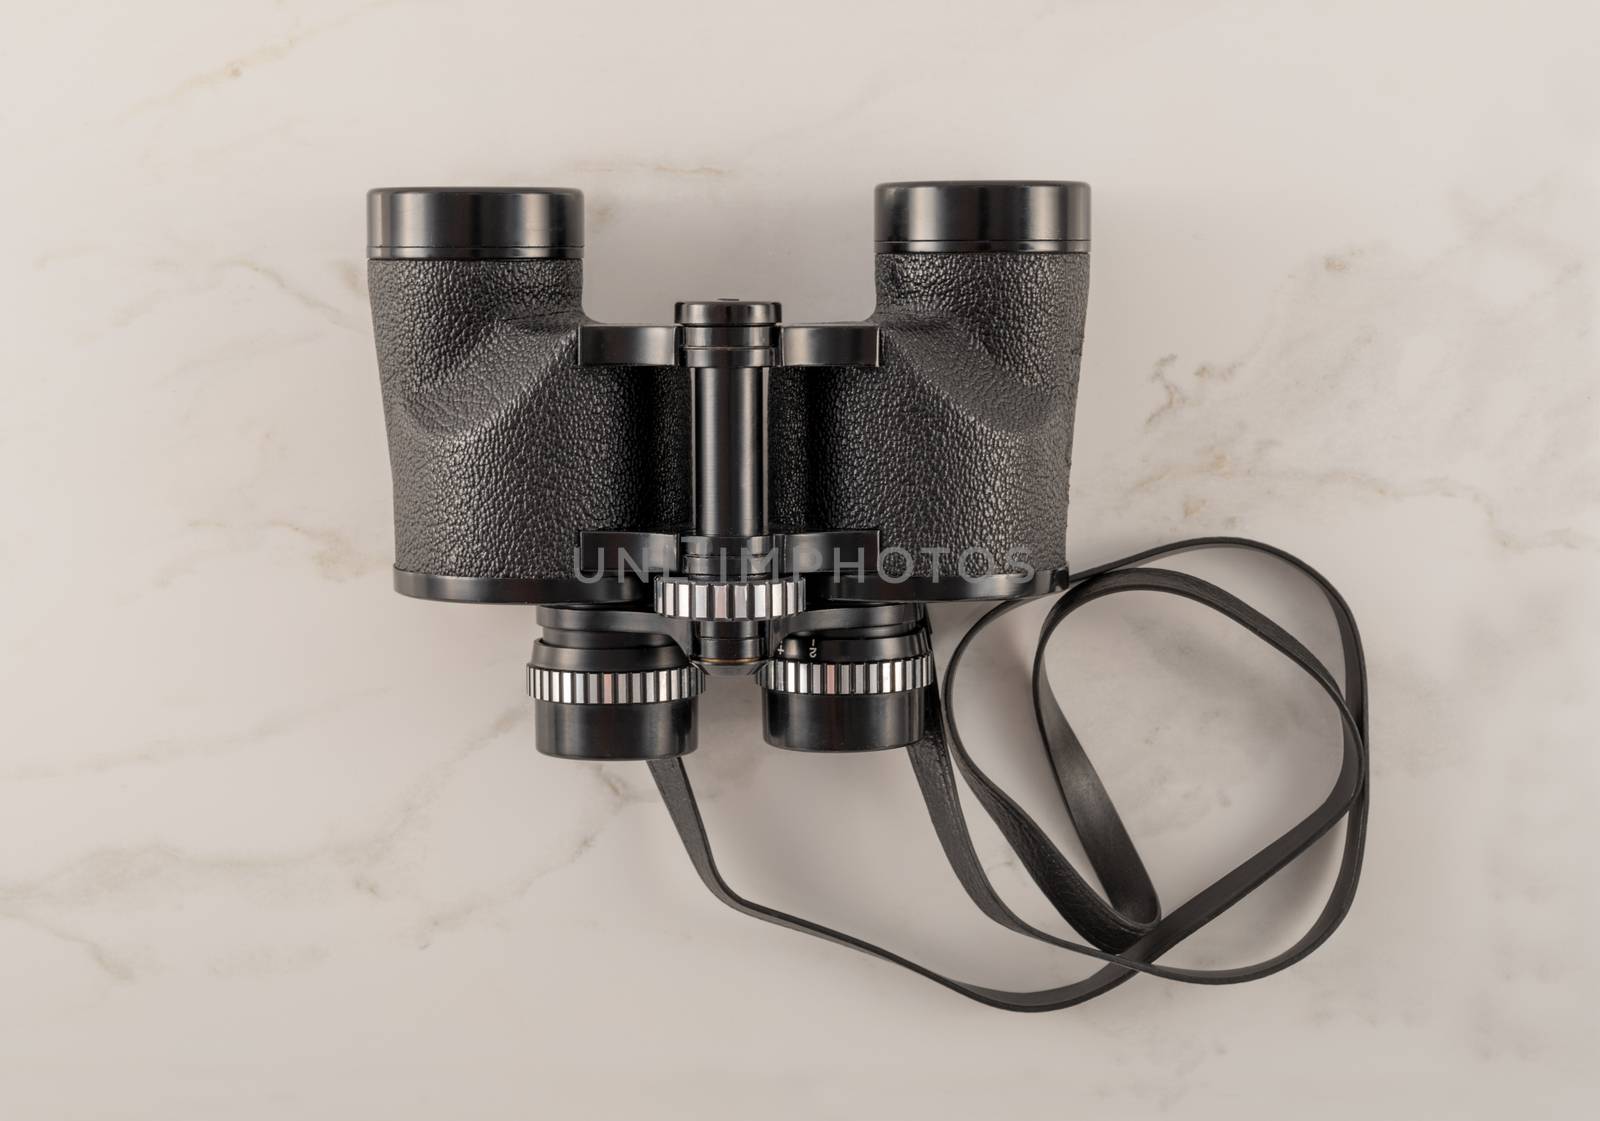 Black vintage binoculars on white marble background